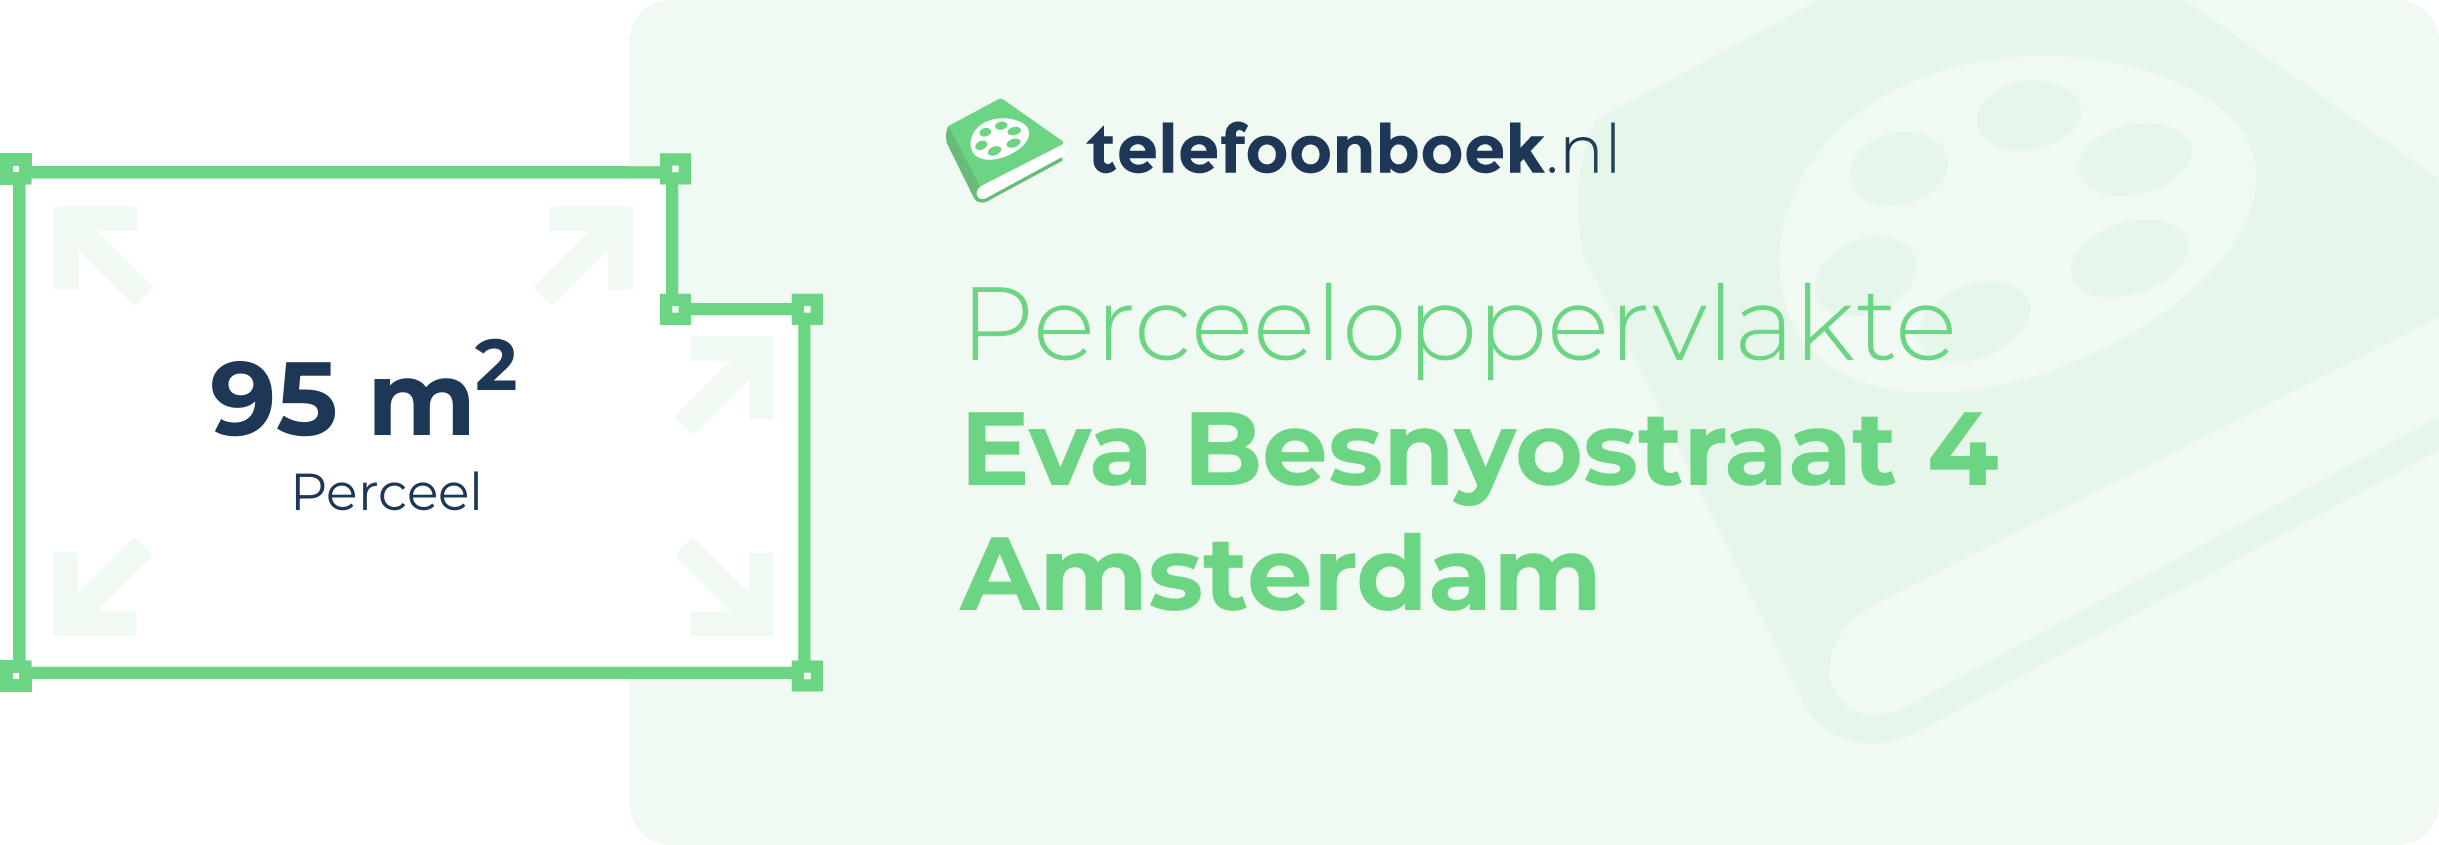 Perceeloppervlakte Eva Besnyostraat 4 Amsterdam